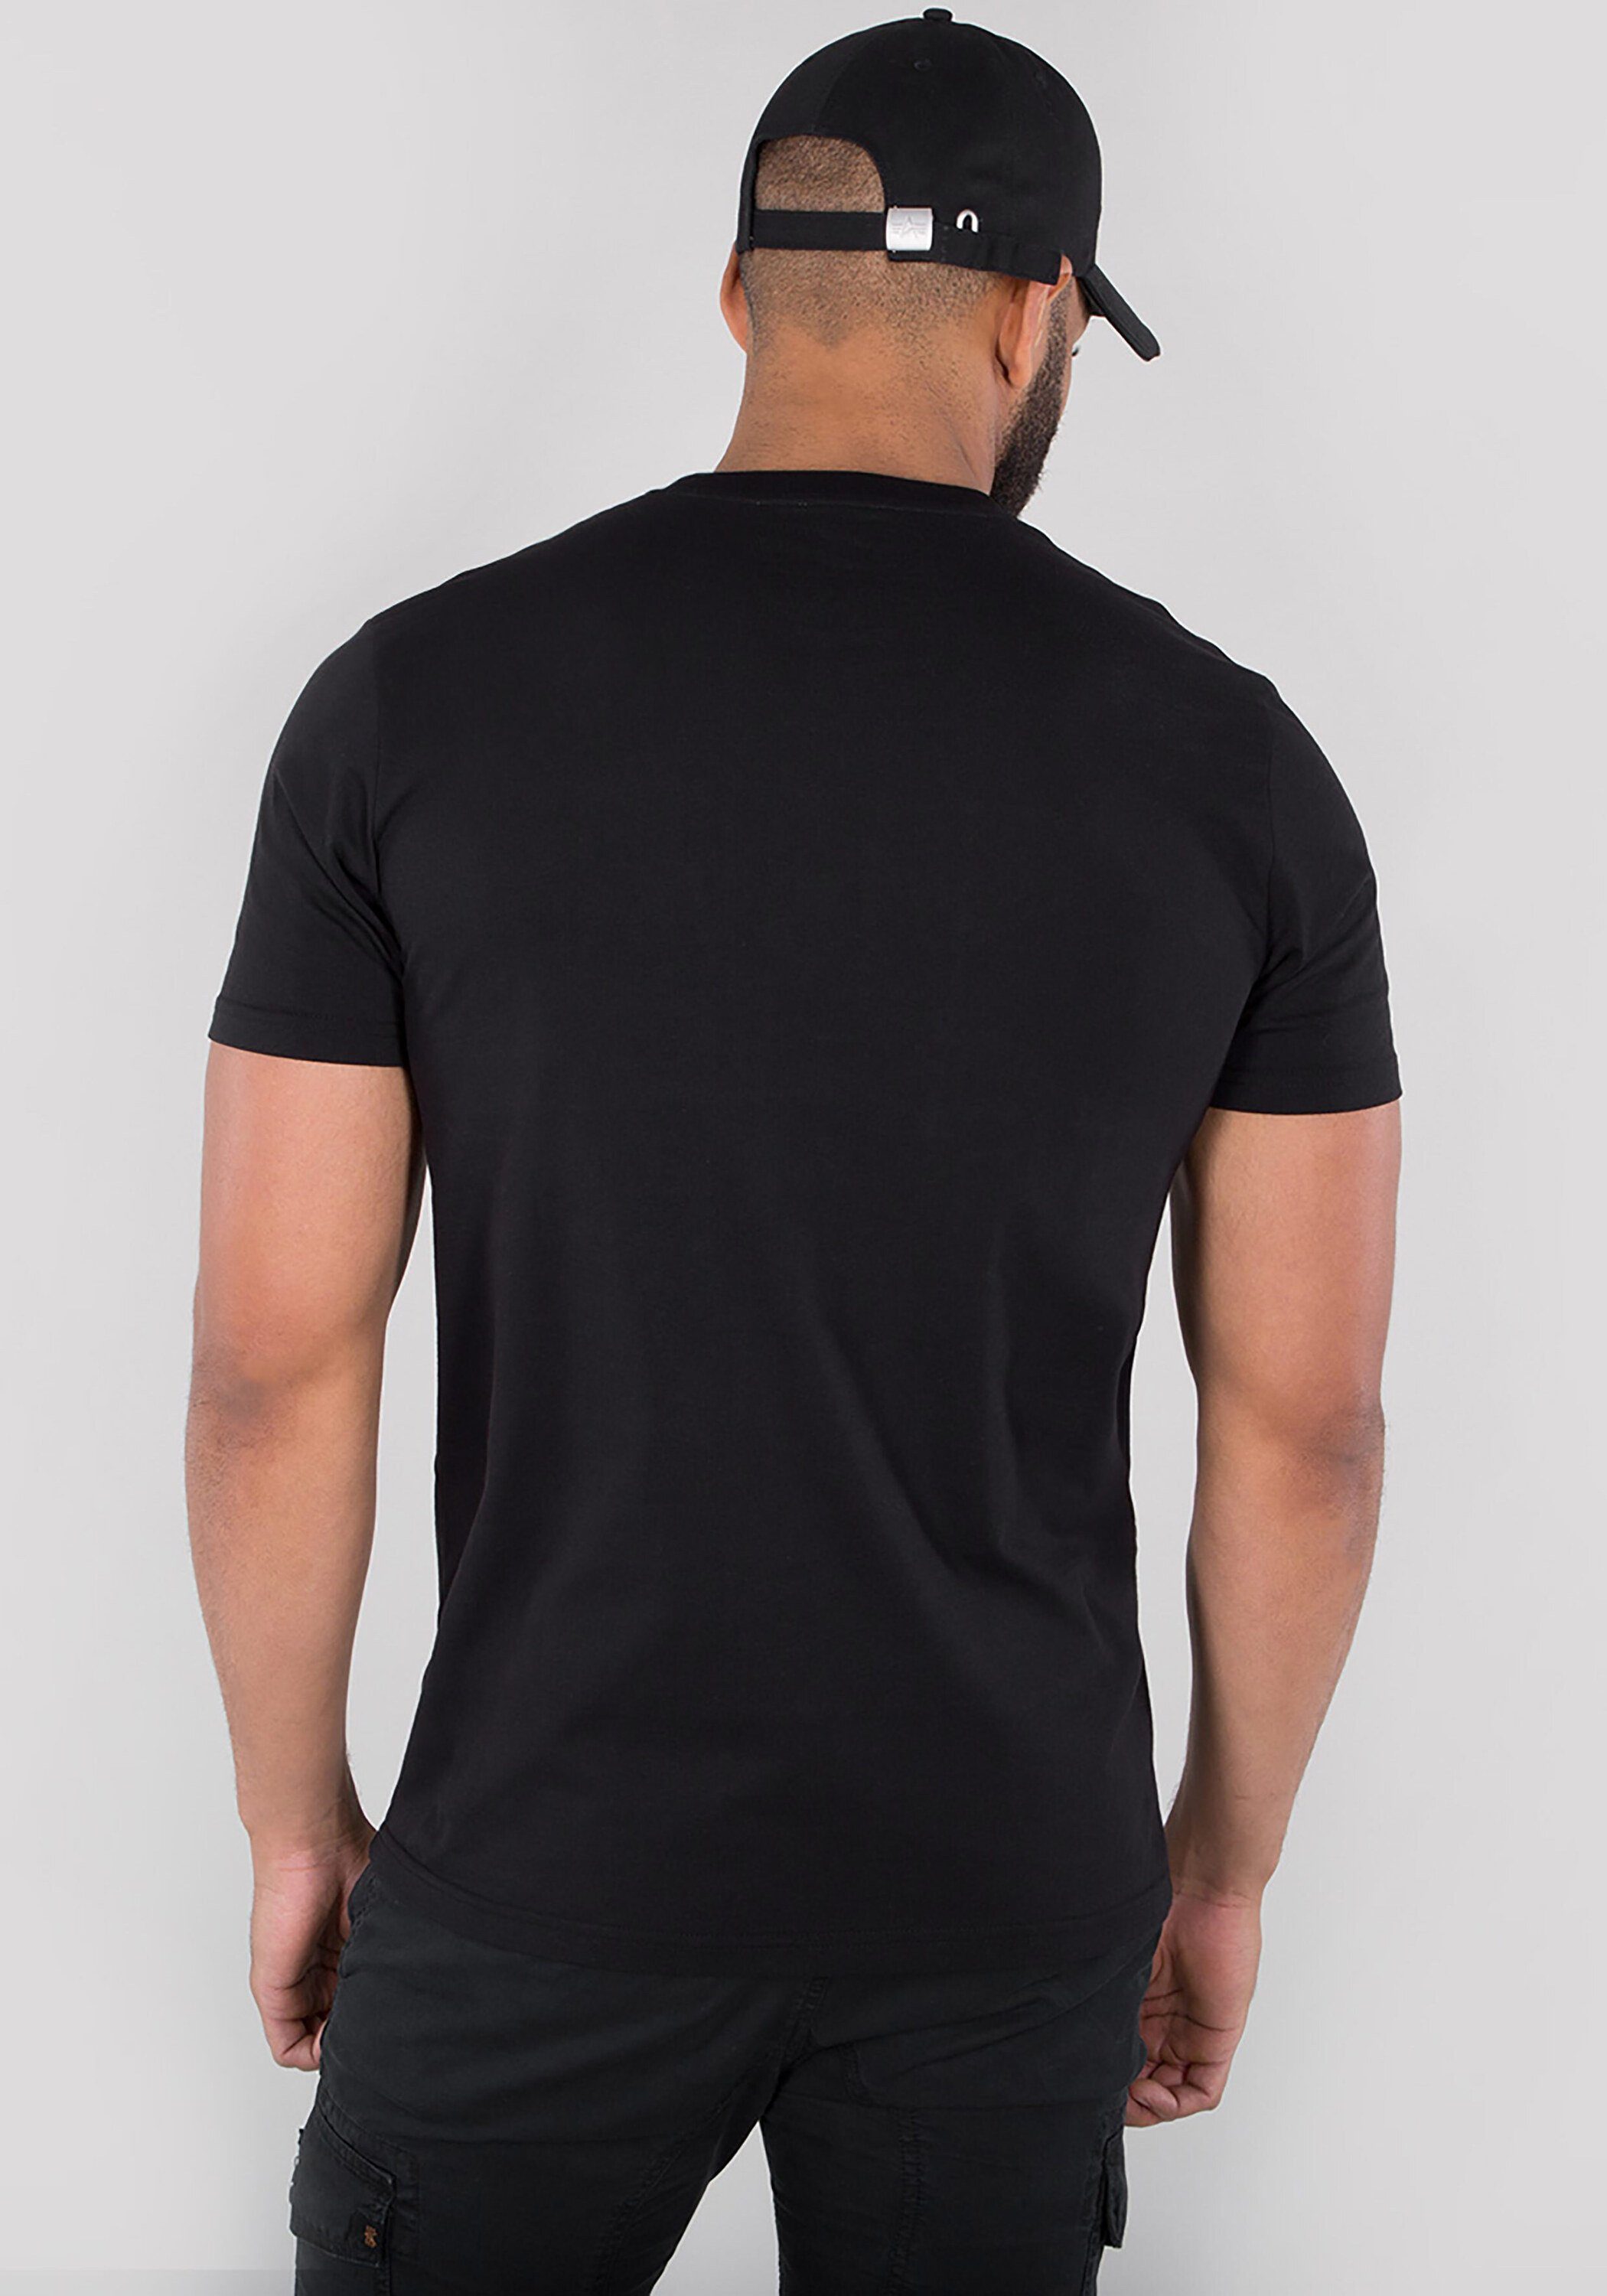 black Industries Inlay T-Shirt Alpha T-Shirts Alpha Alpha - Industries Men T